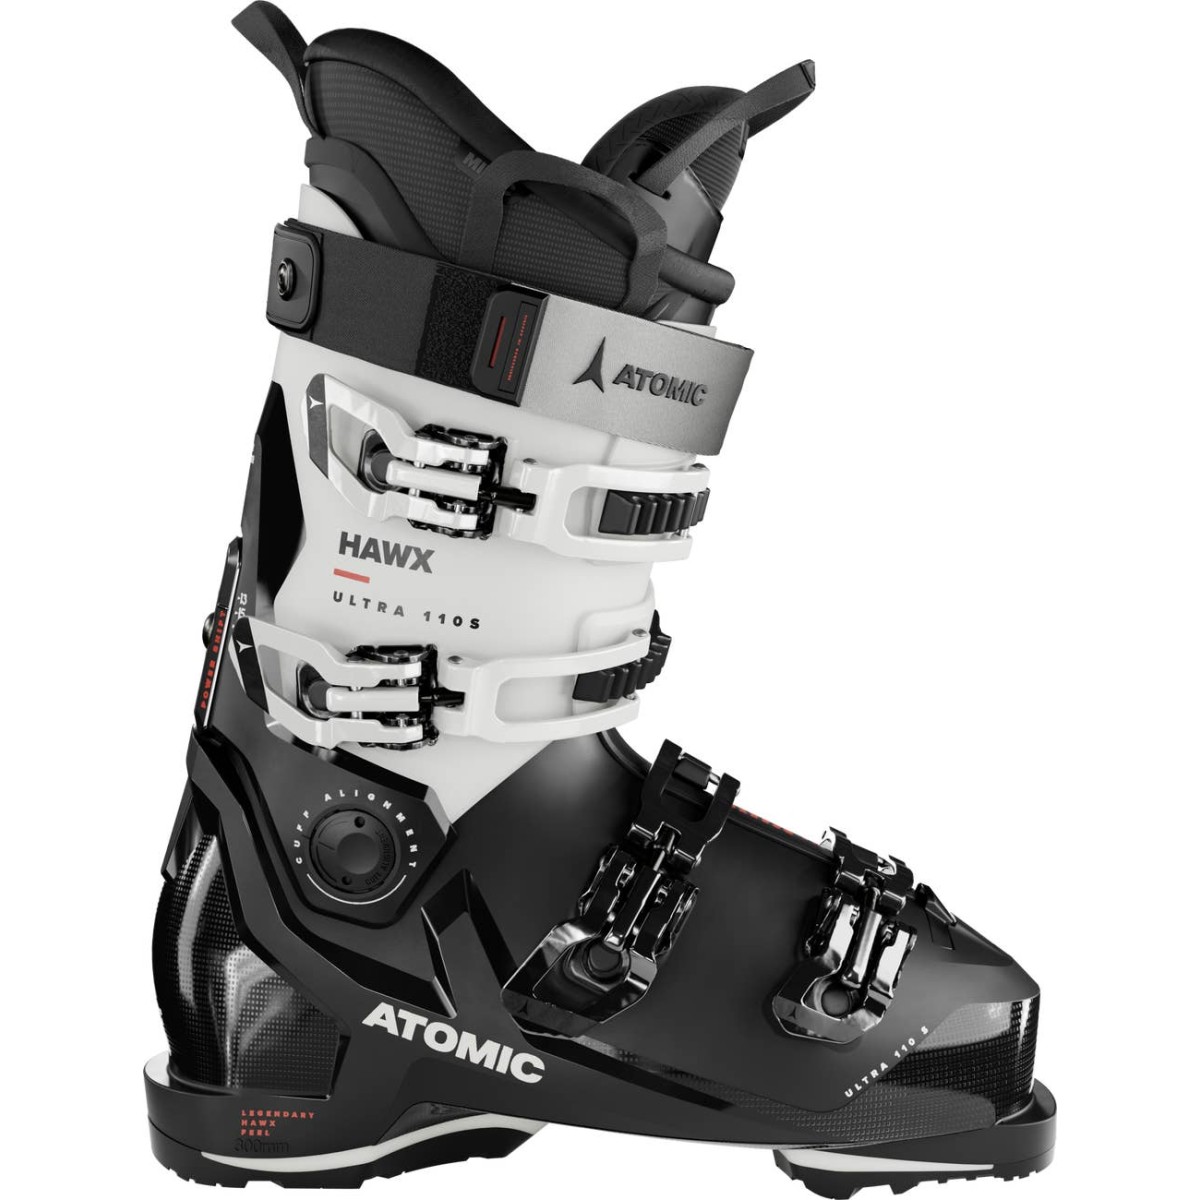 ATOMIC HAWX ULTRA 110 S GW alpine ski boots - black/white